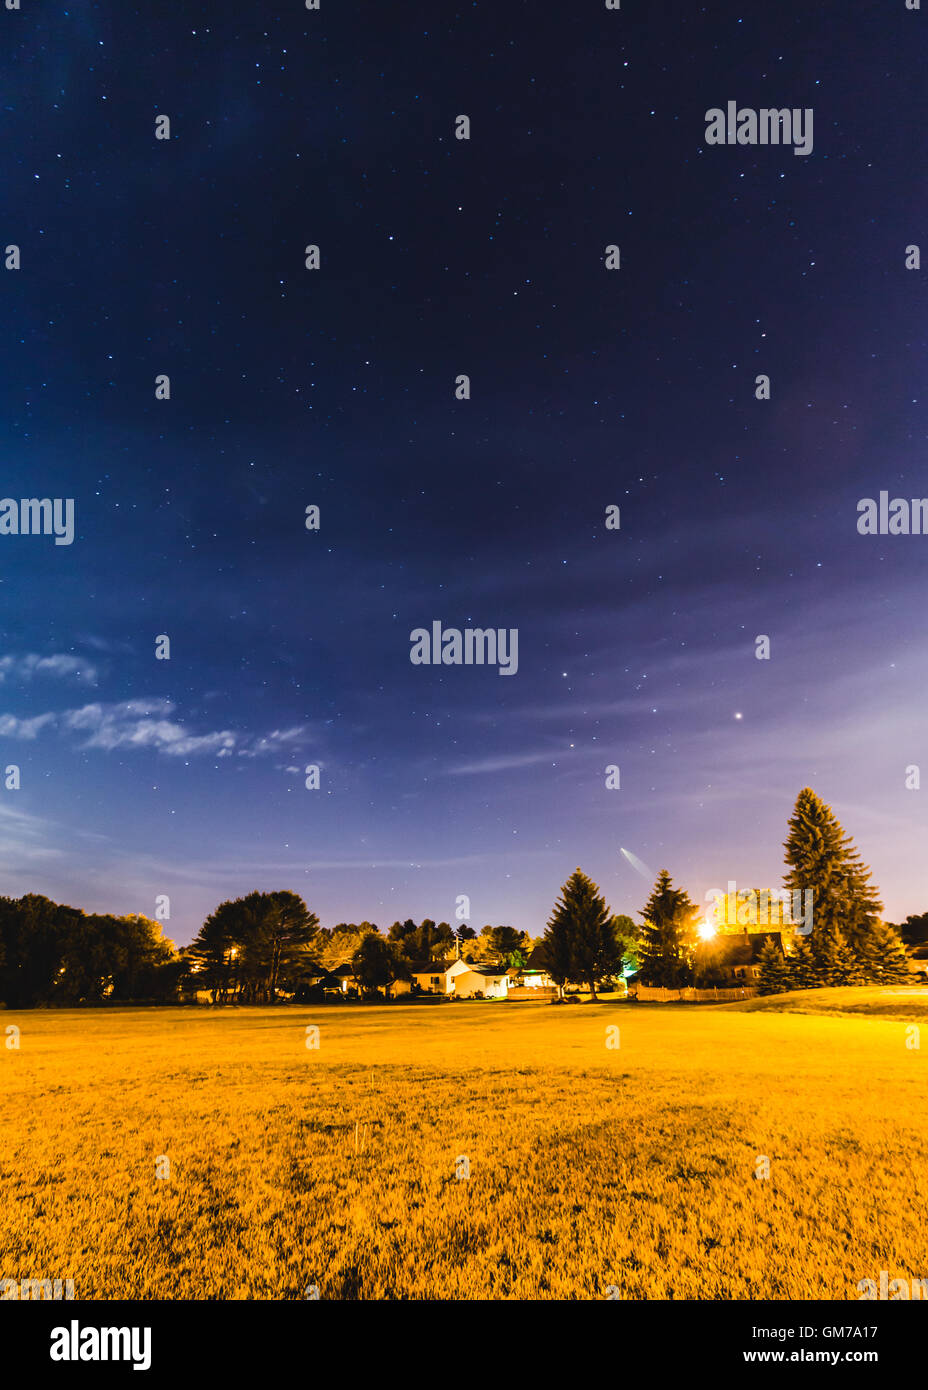 Backyard stars in night sky above a small neighborhood Stock Photo